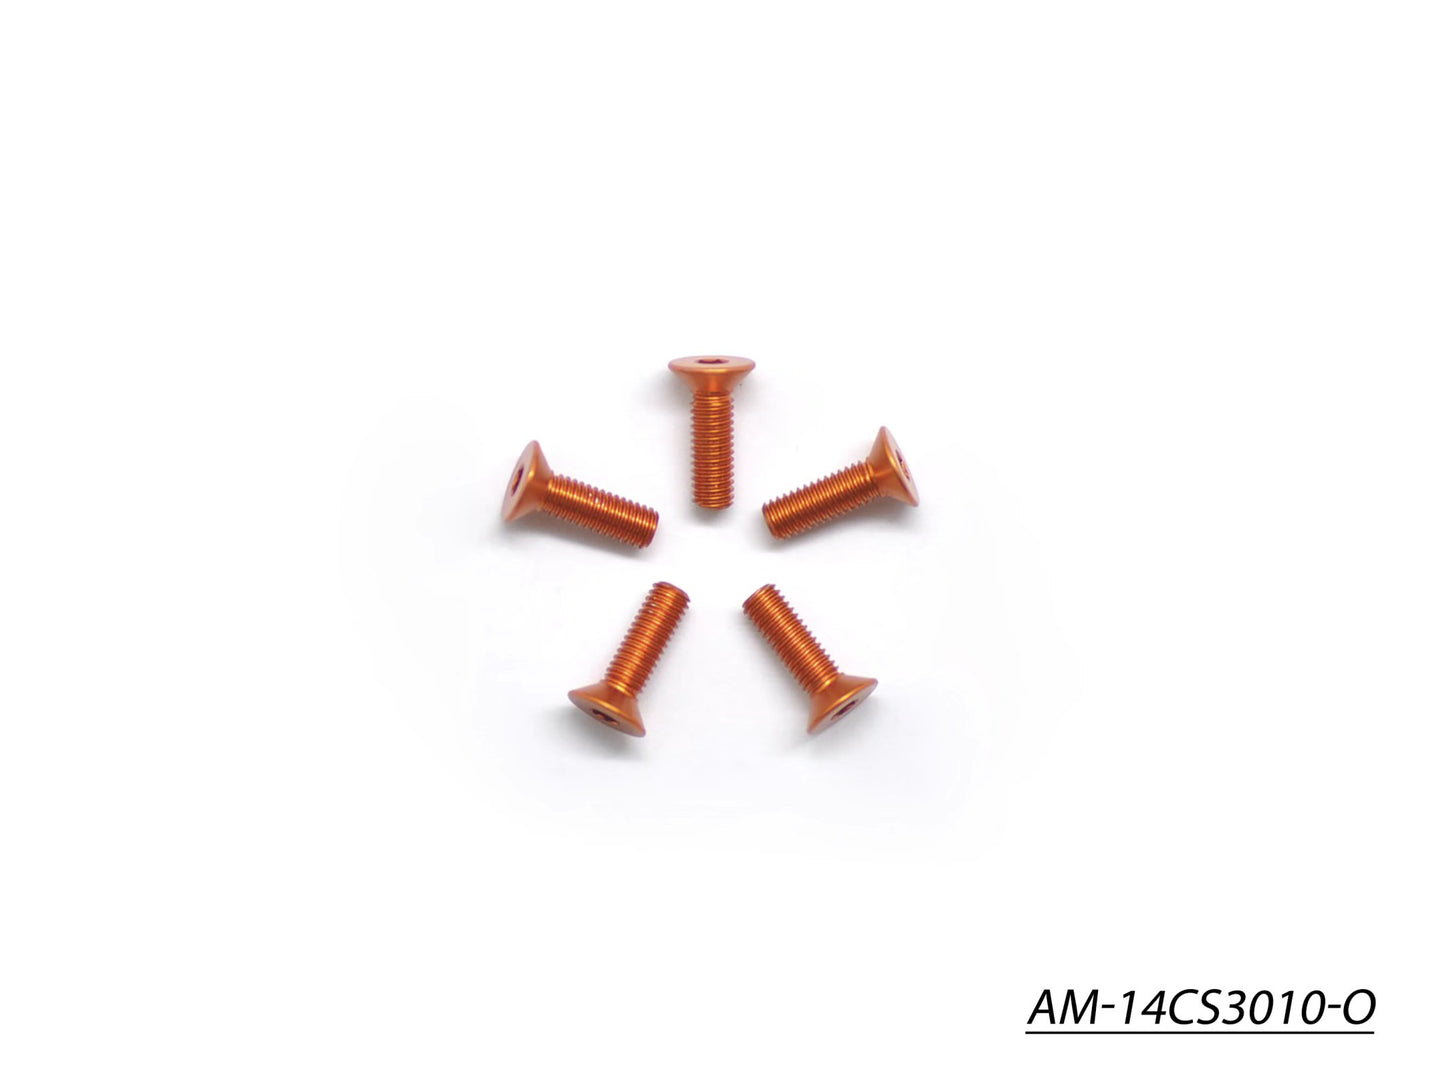 Alu Screw Allen Countersunk M3X10 Orange (7075) (5) (AM-14CS3010-O)